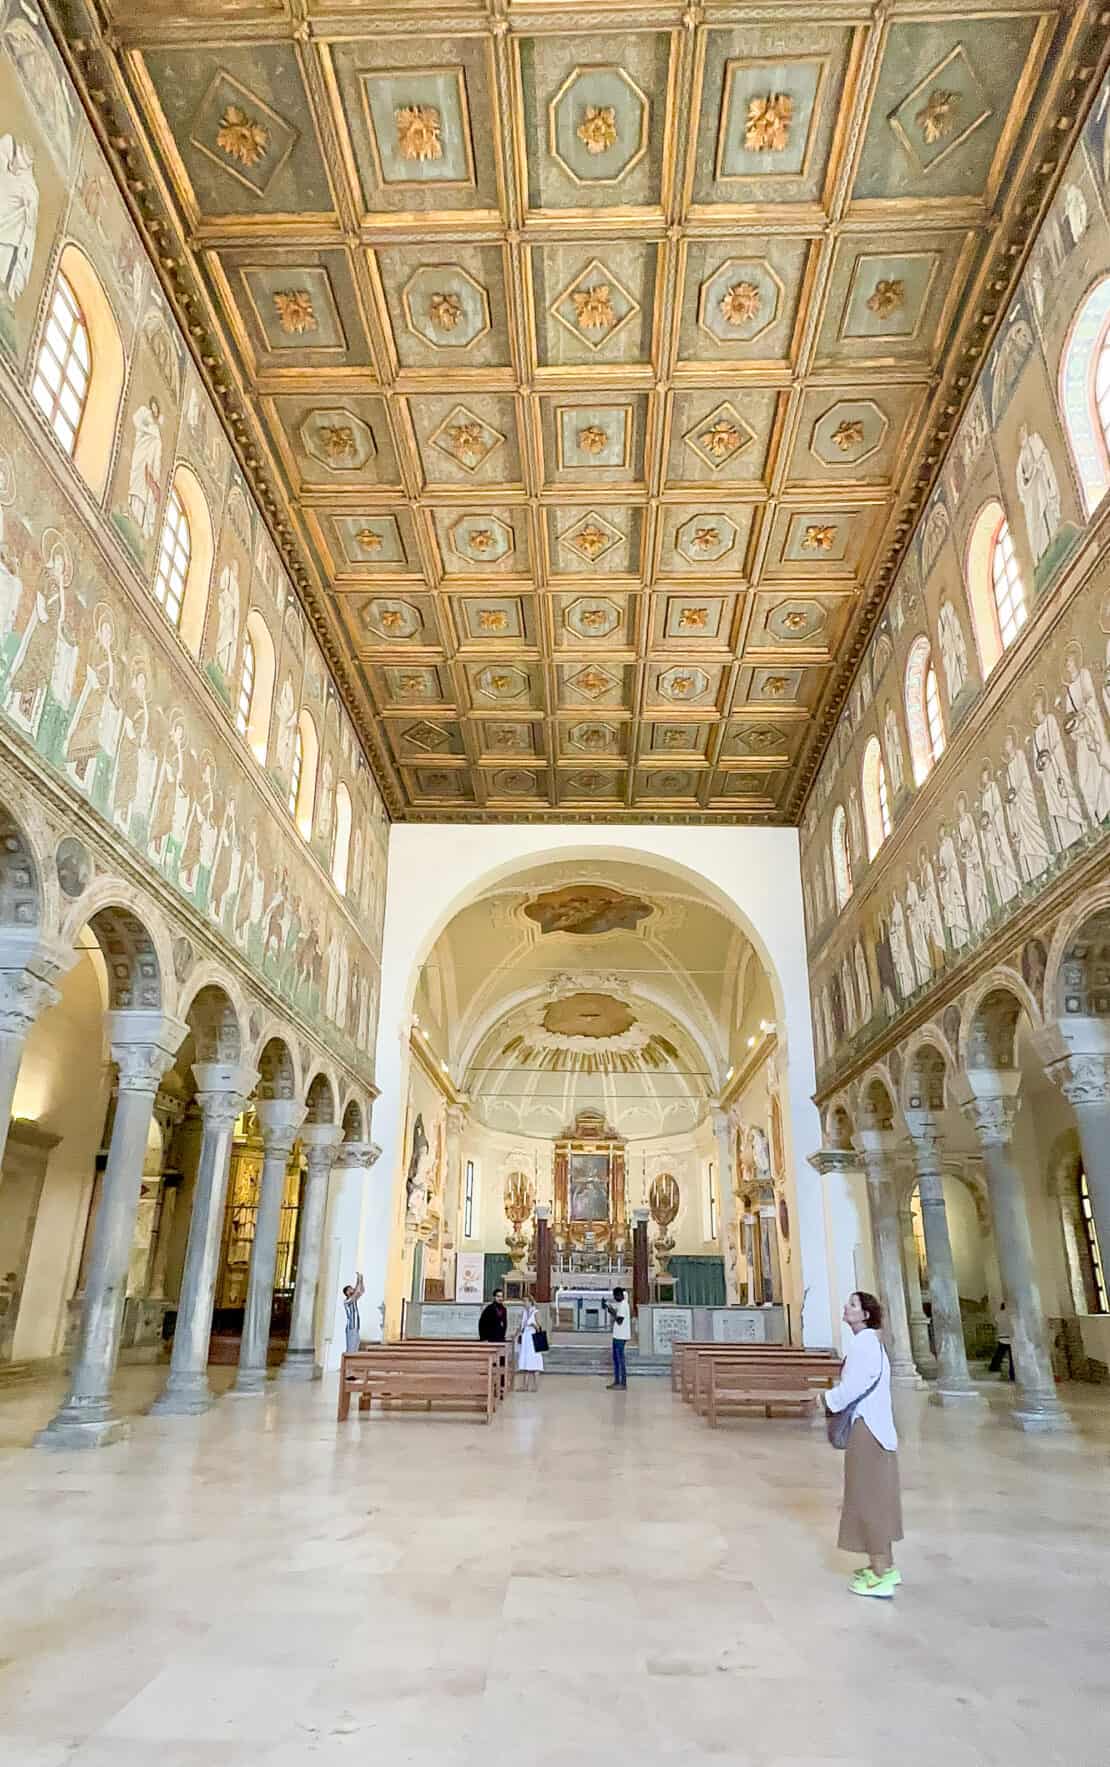  Basilica di Sant'Apollinare Nuovo interior with woman looking up